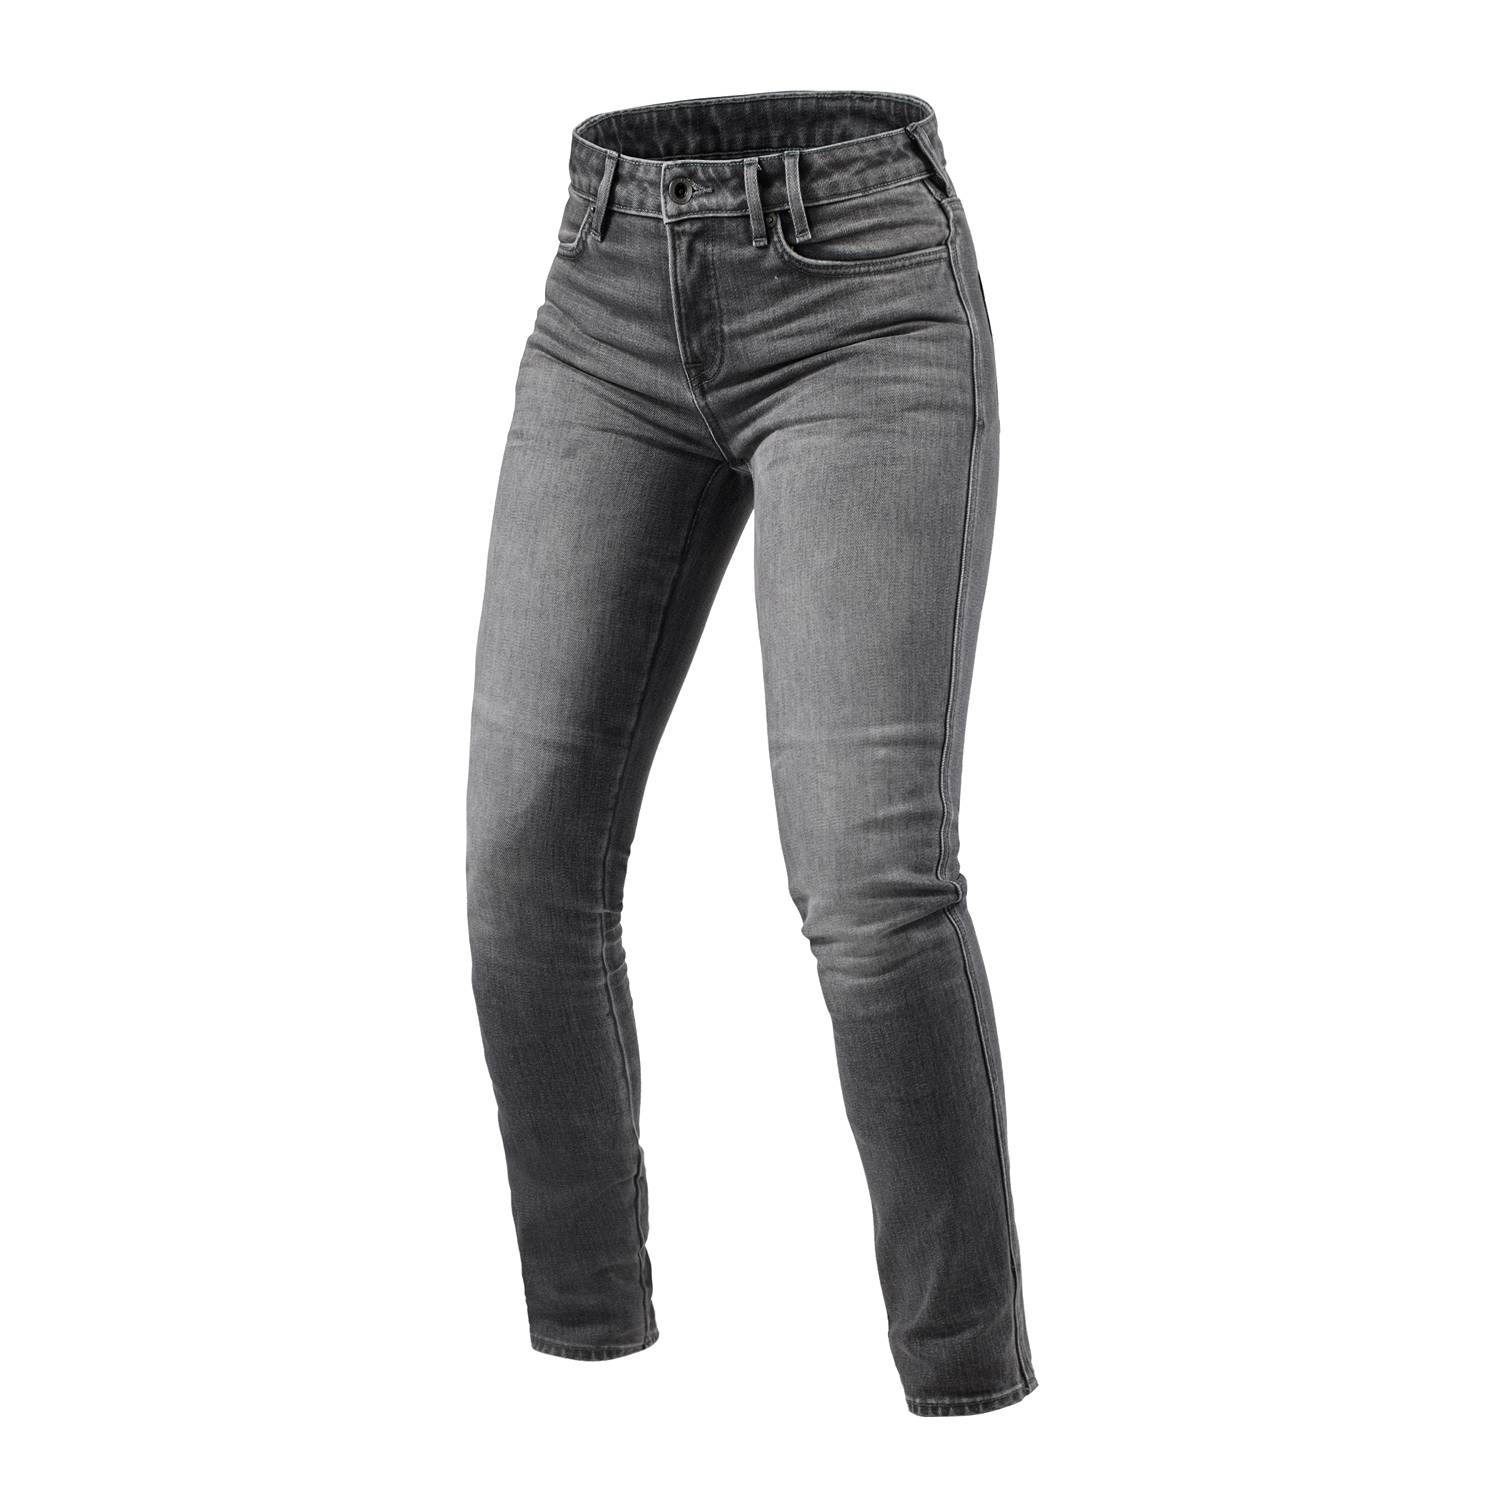 Image of REV'IT! Jeans Shelby 2 Ladies SK Medium Grey Stone L32 Talla L32/W27